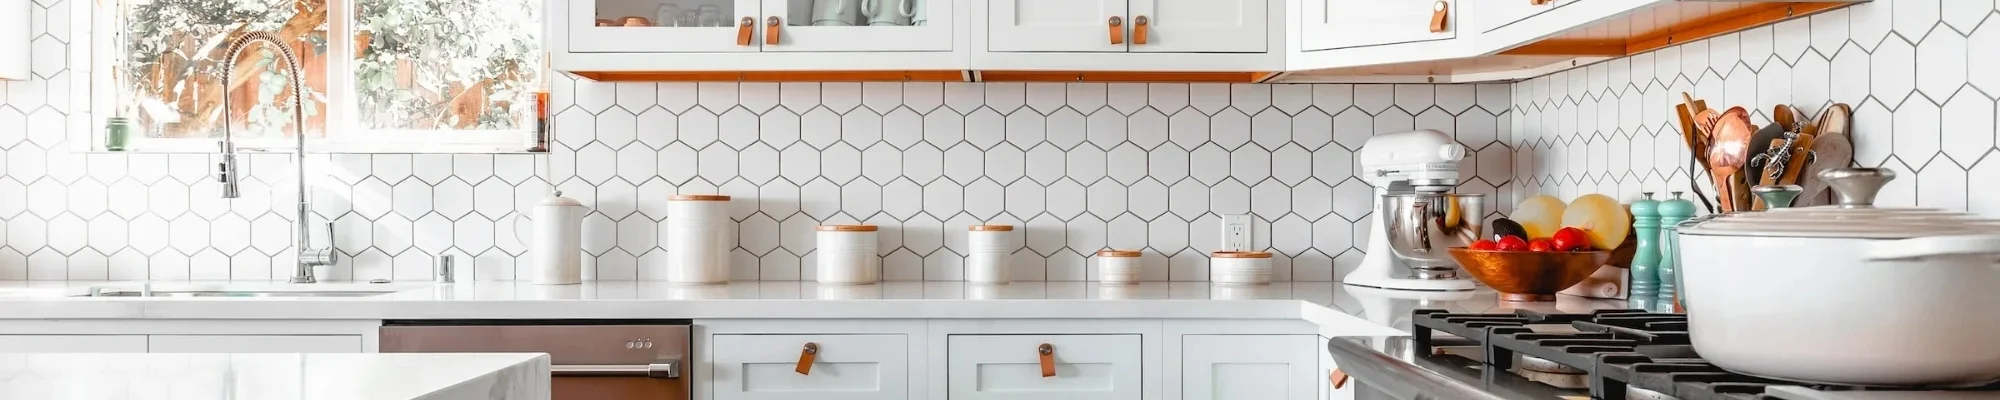 Tile backsplash in a modern kitchen | Altimate Flooring  | Rapid City, SD